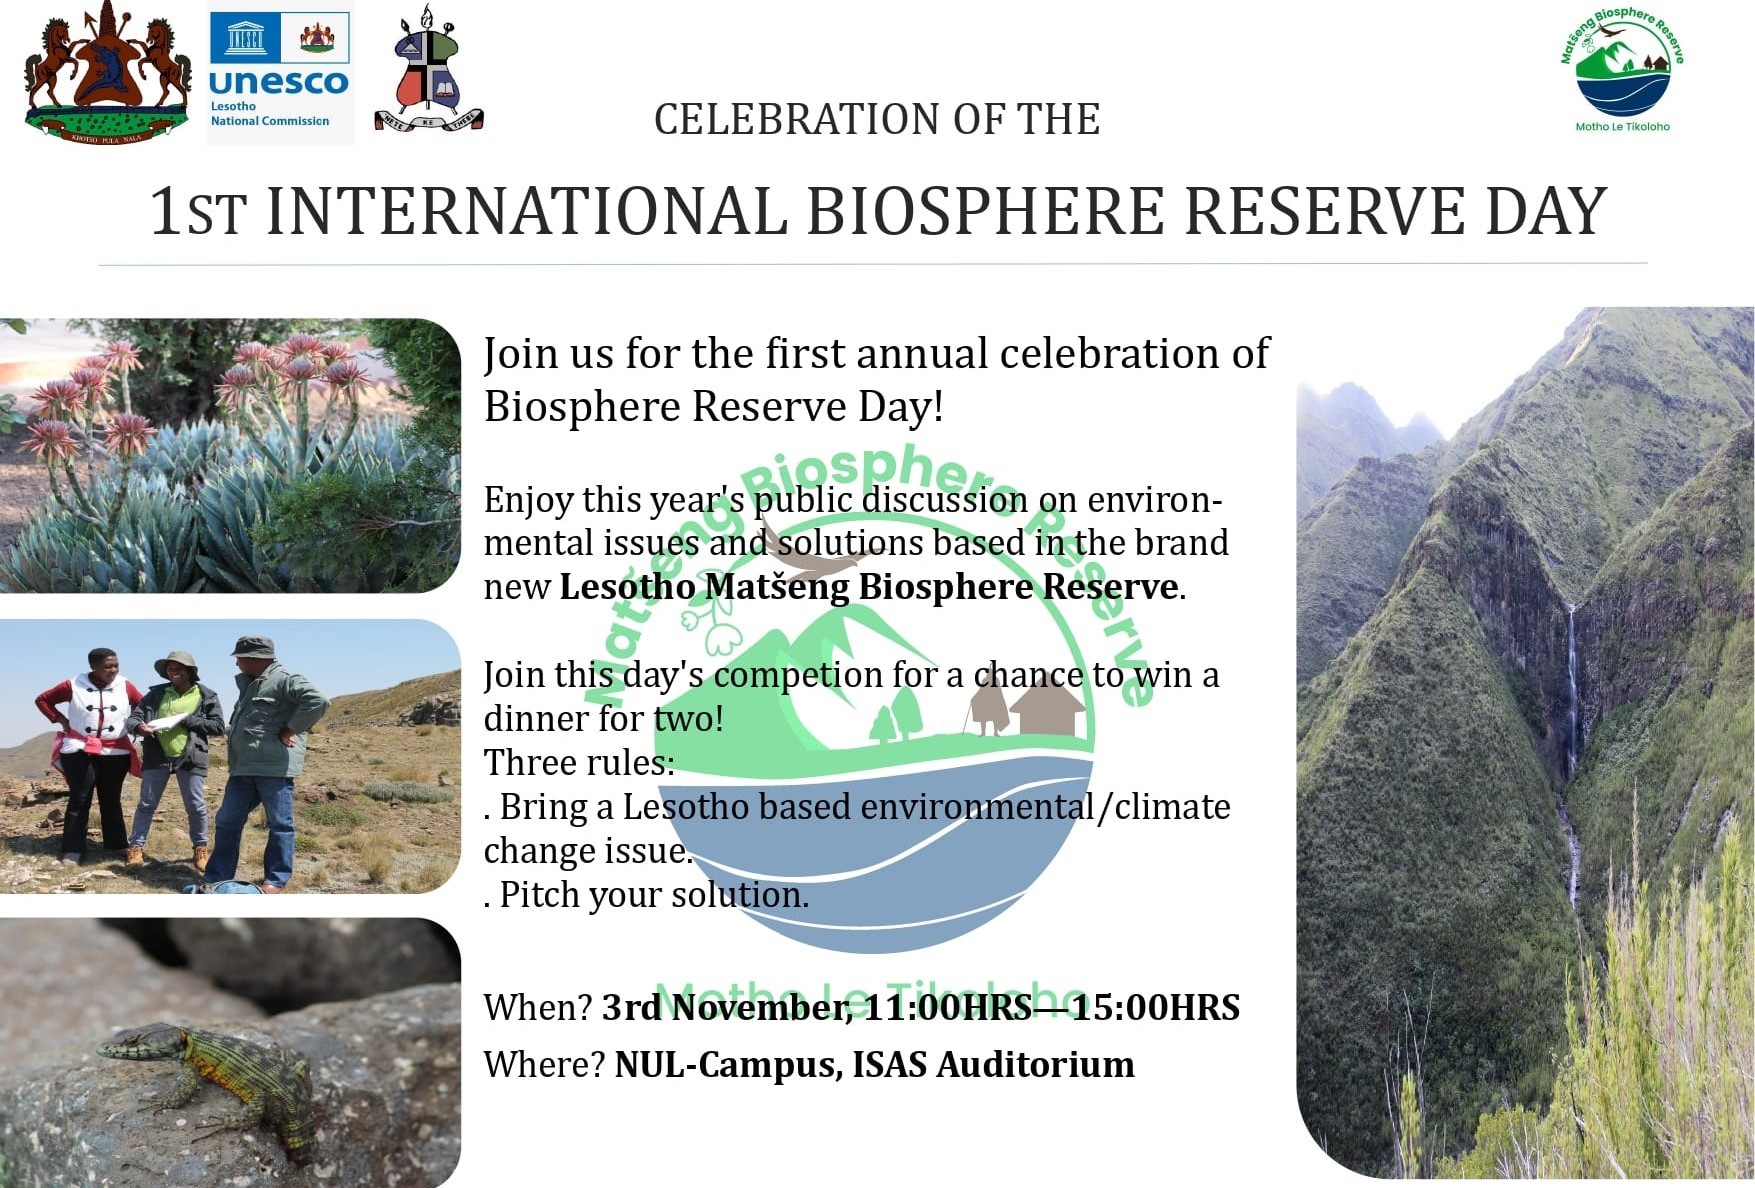 This is Matsheng Biosphere Reserve